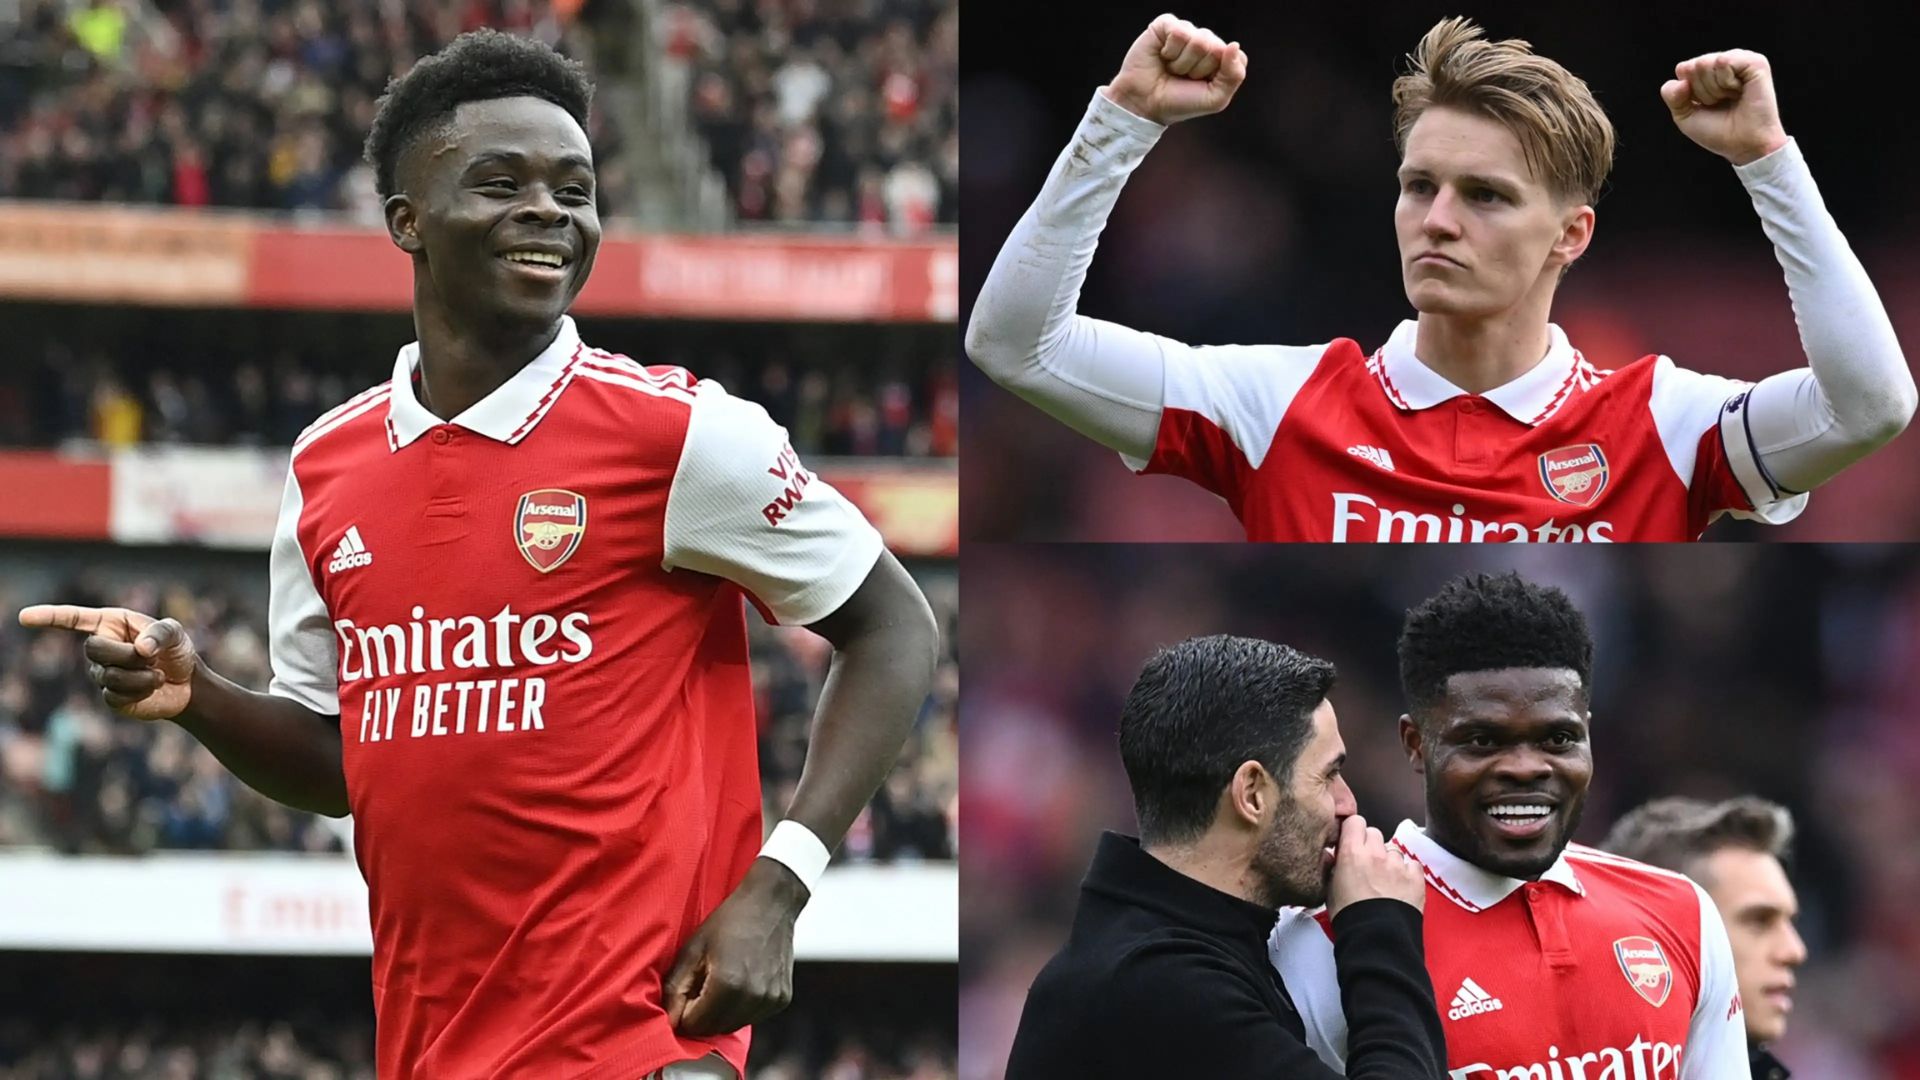 Confirmed: Arsenal senior players under agreement for next season after Bukayo Saka report